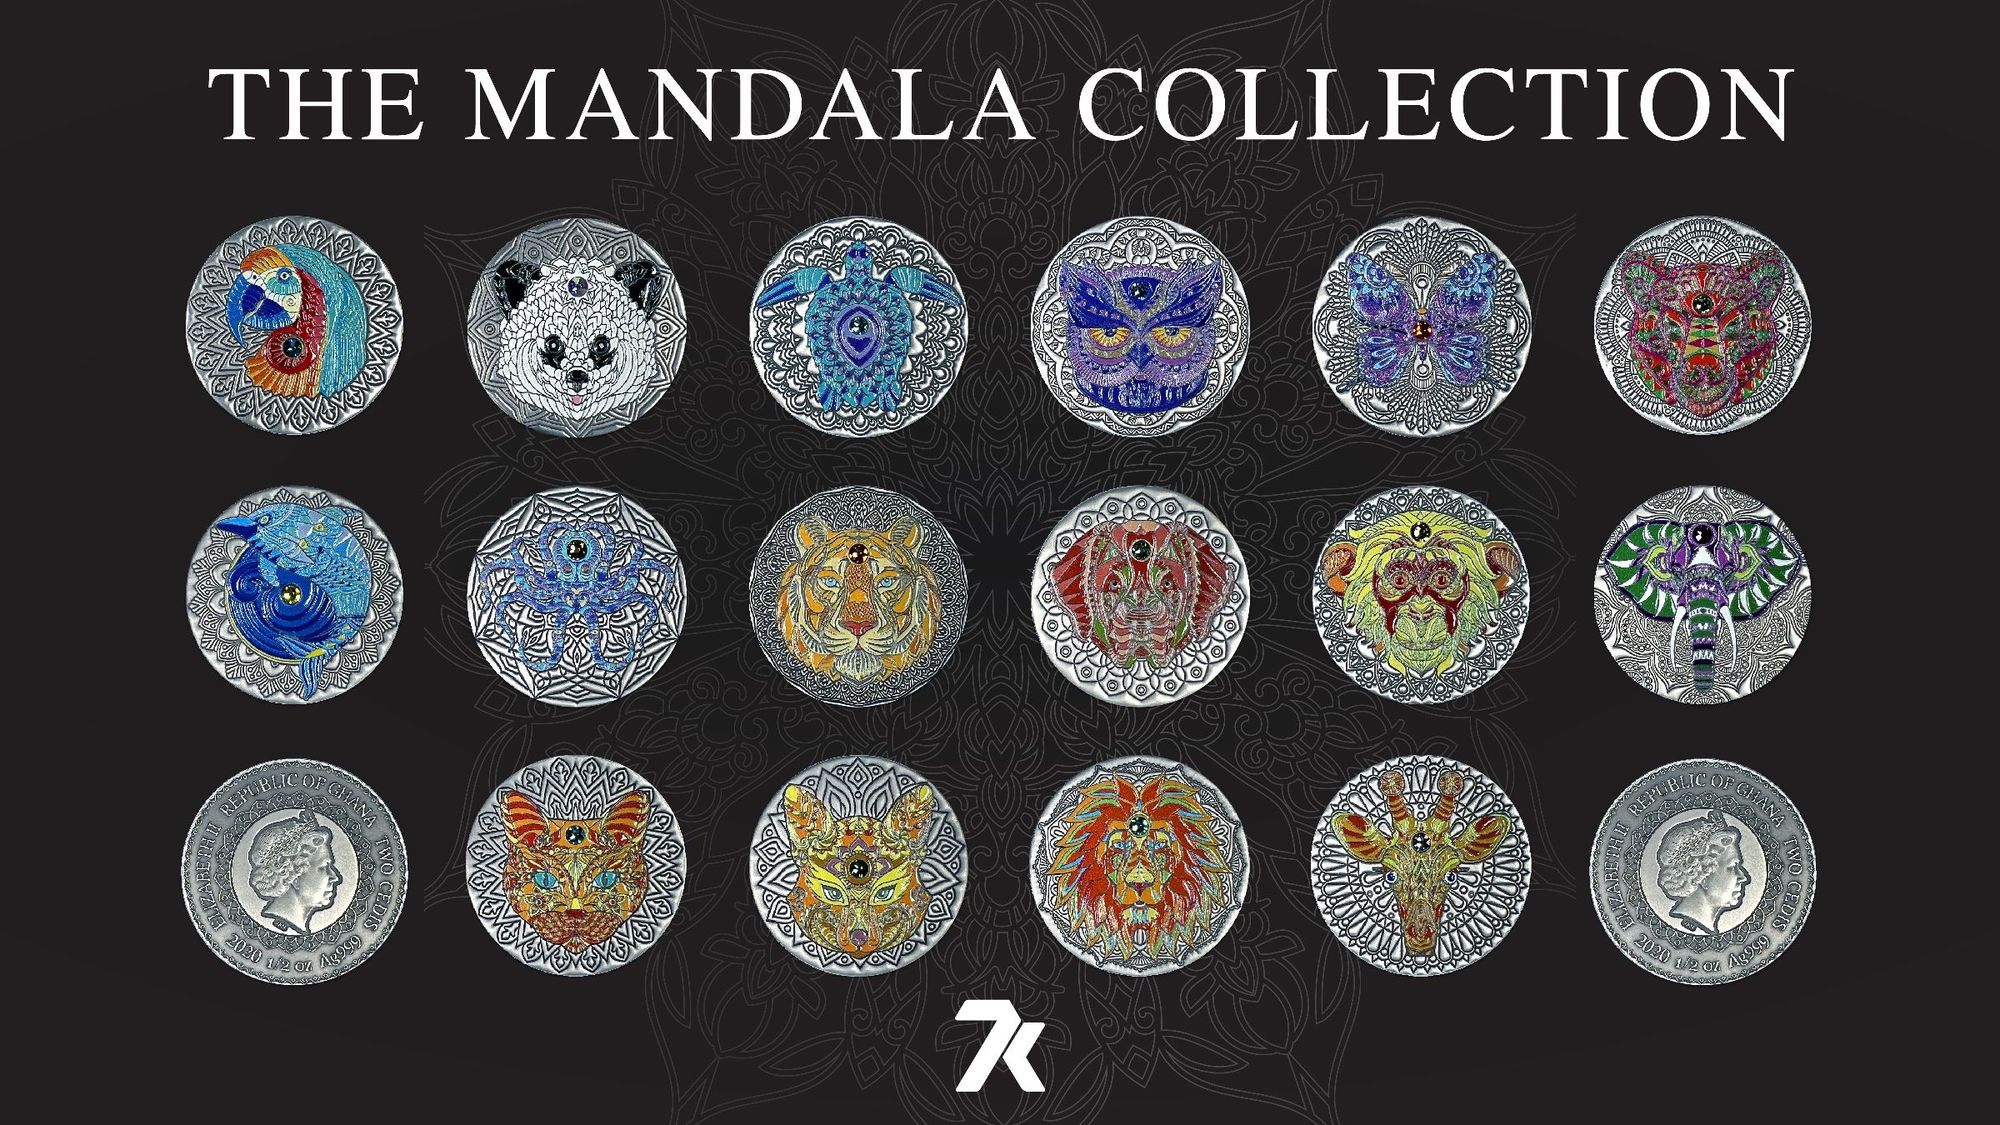 Mandala Animals Collection - 7k Exclusive!